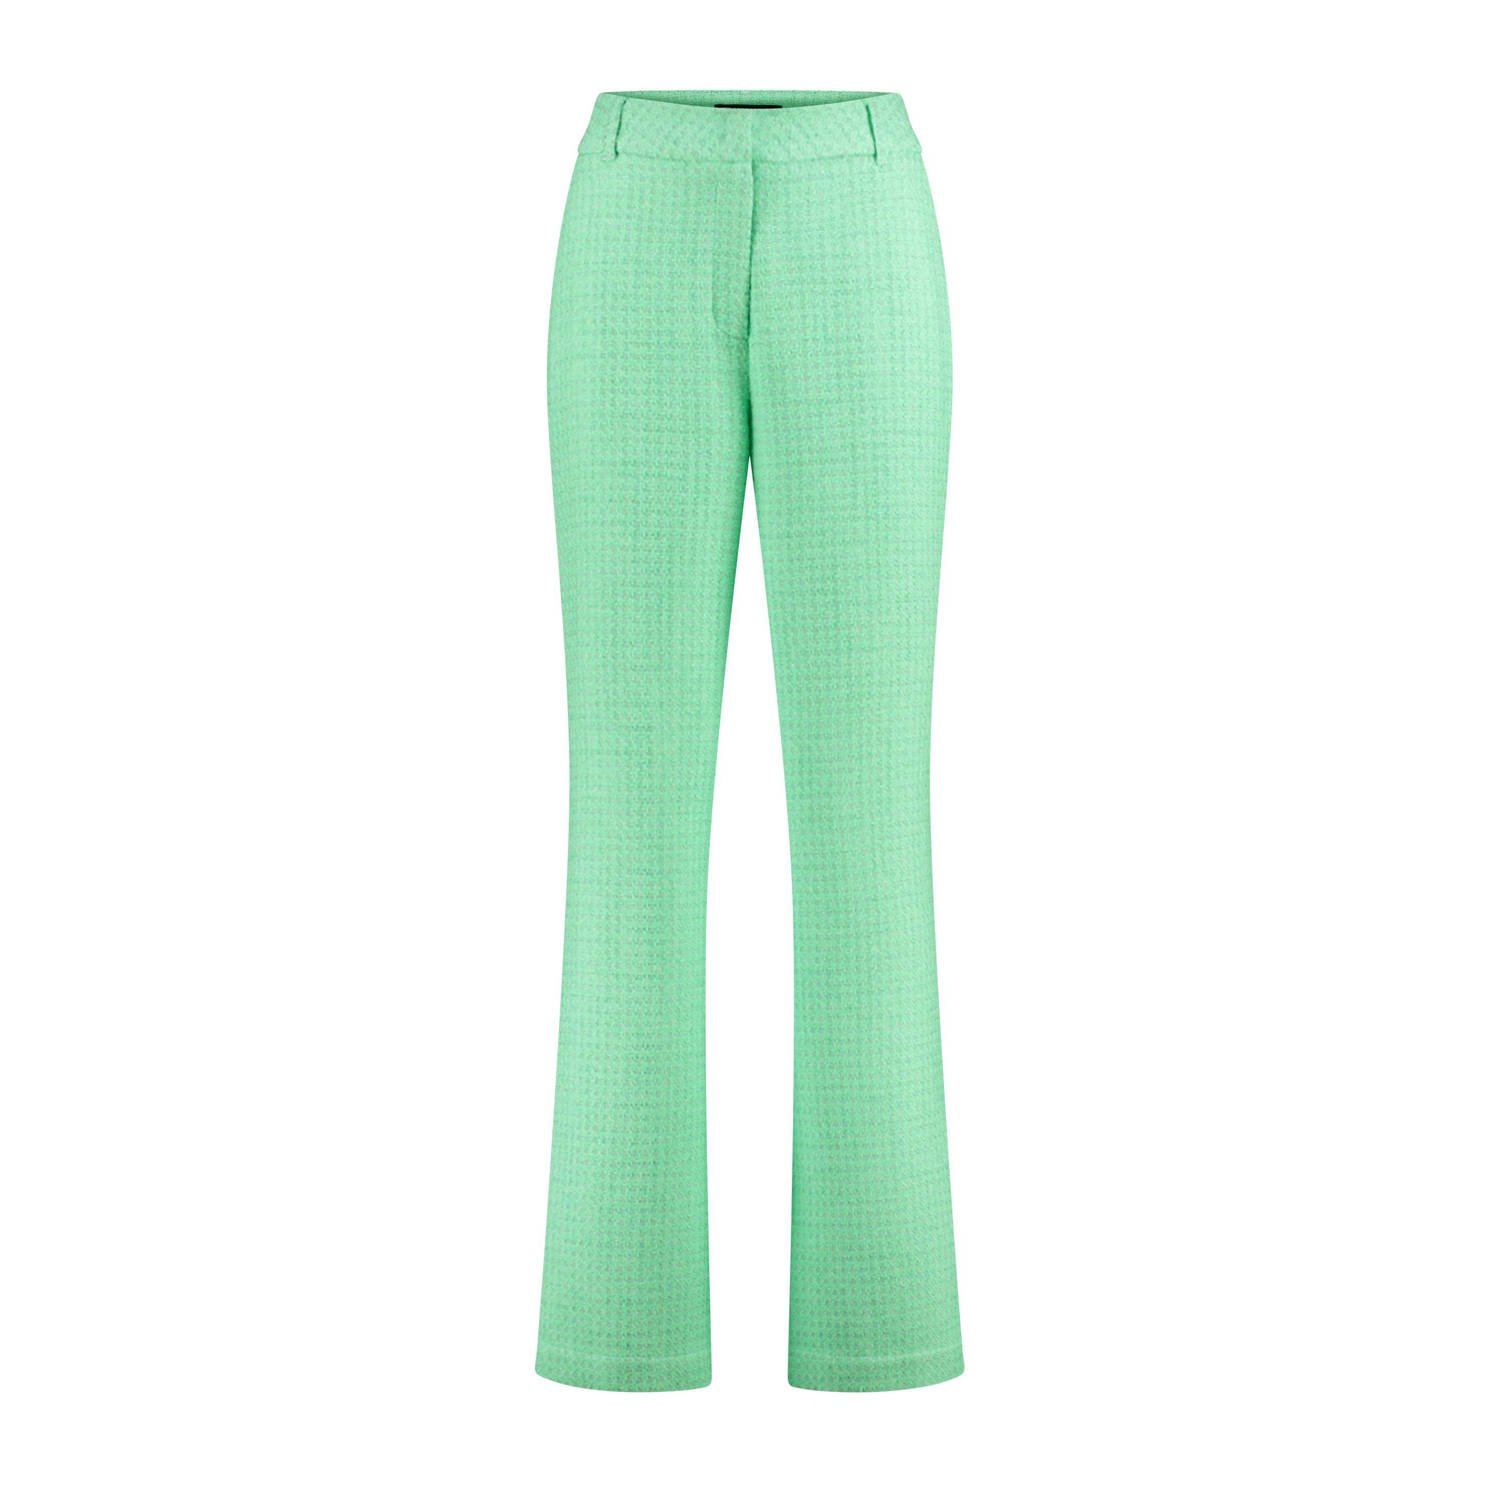 Expresso geruite wide leg pantalon groen